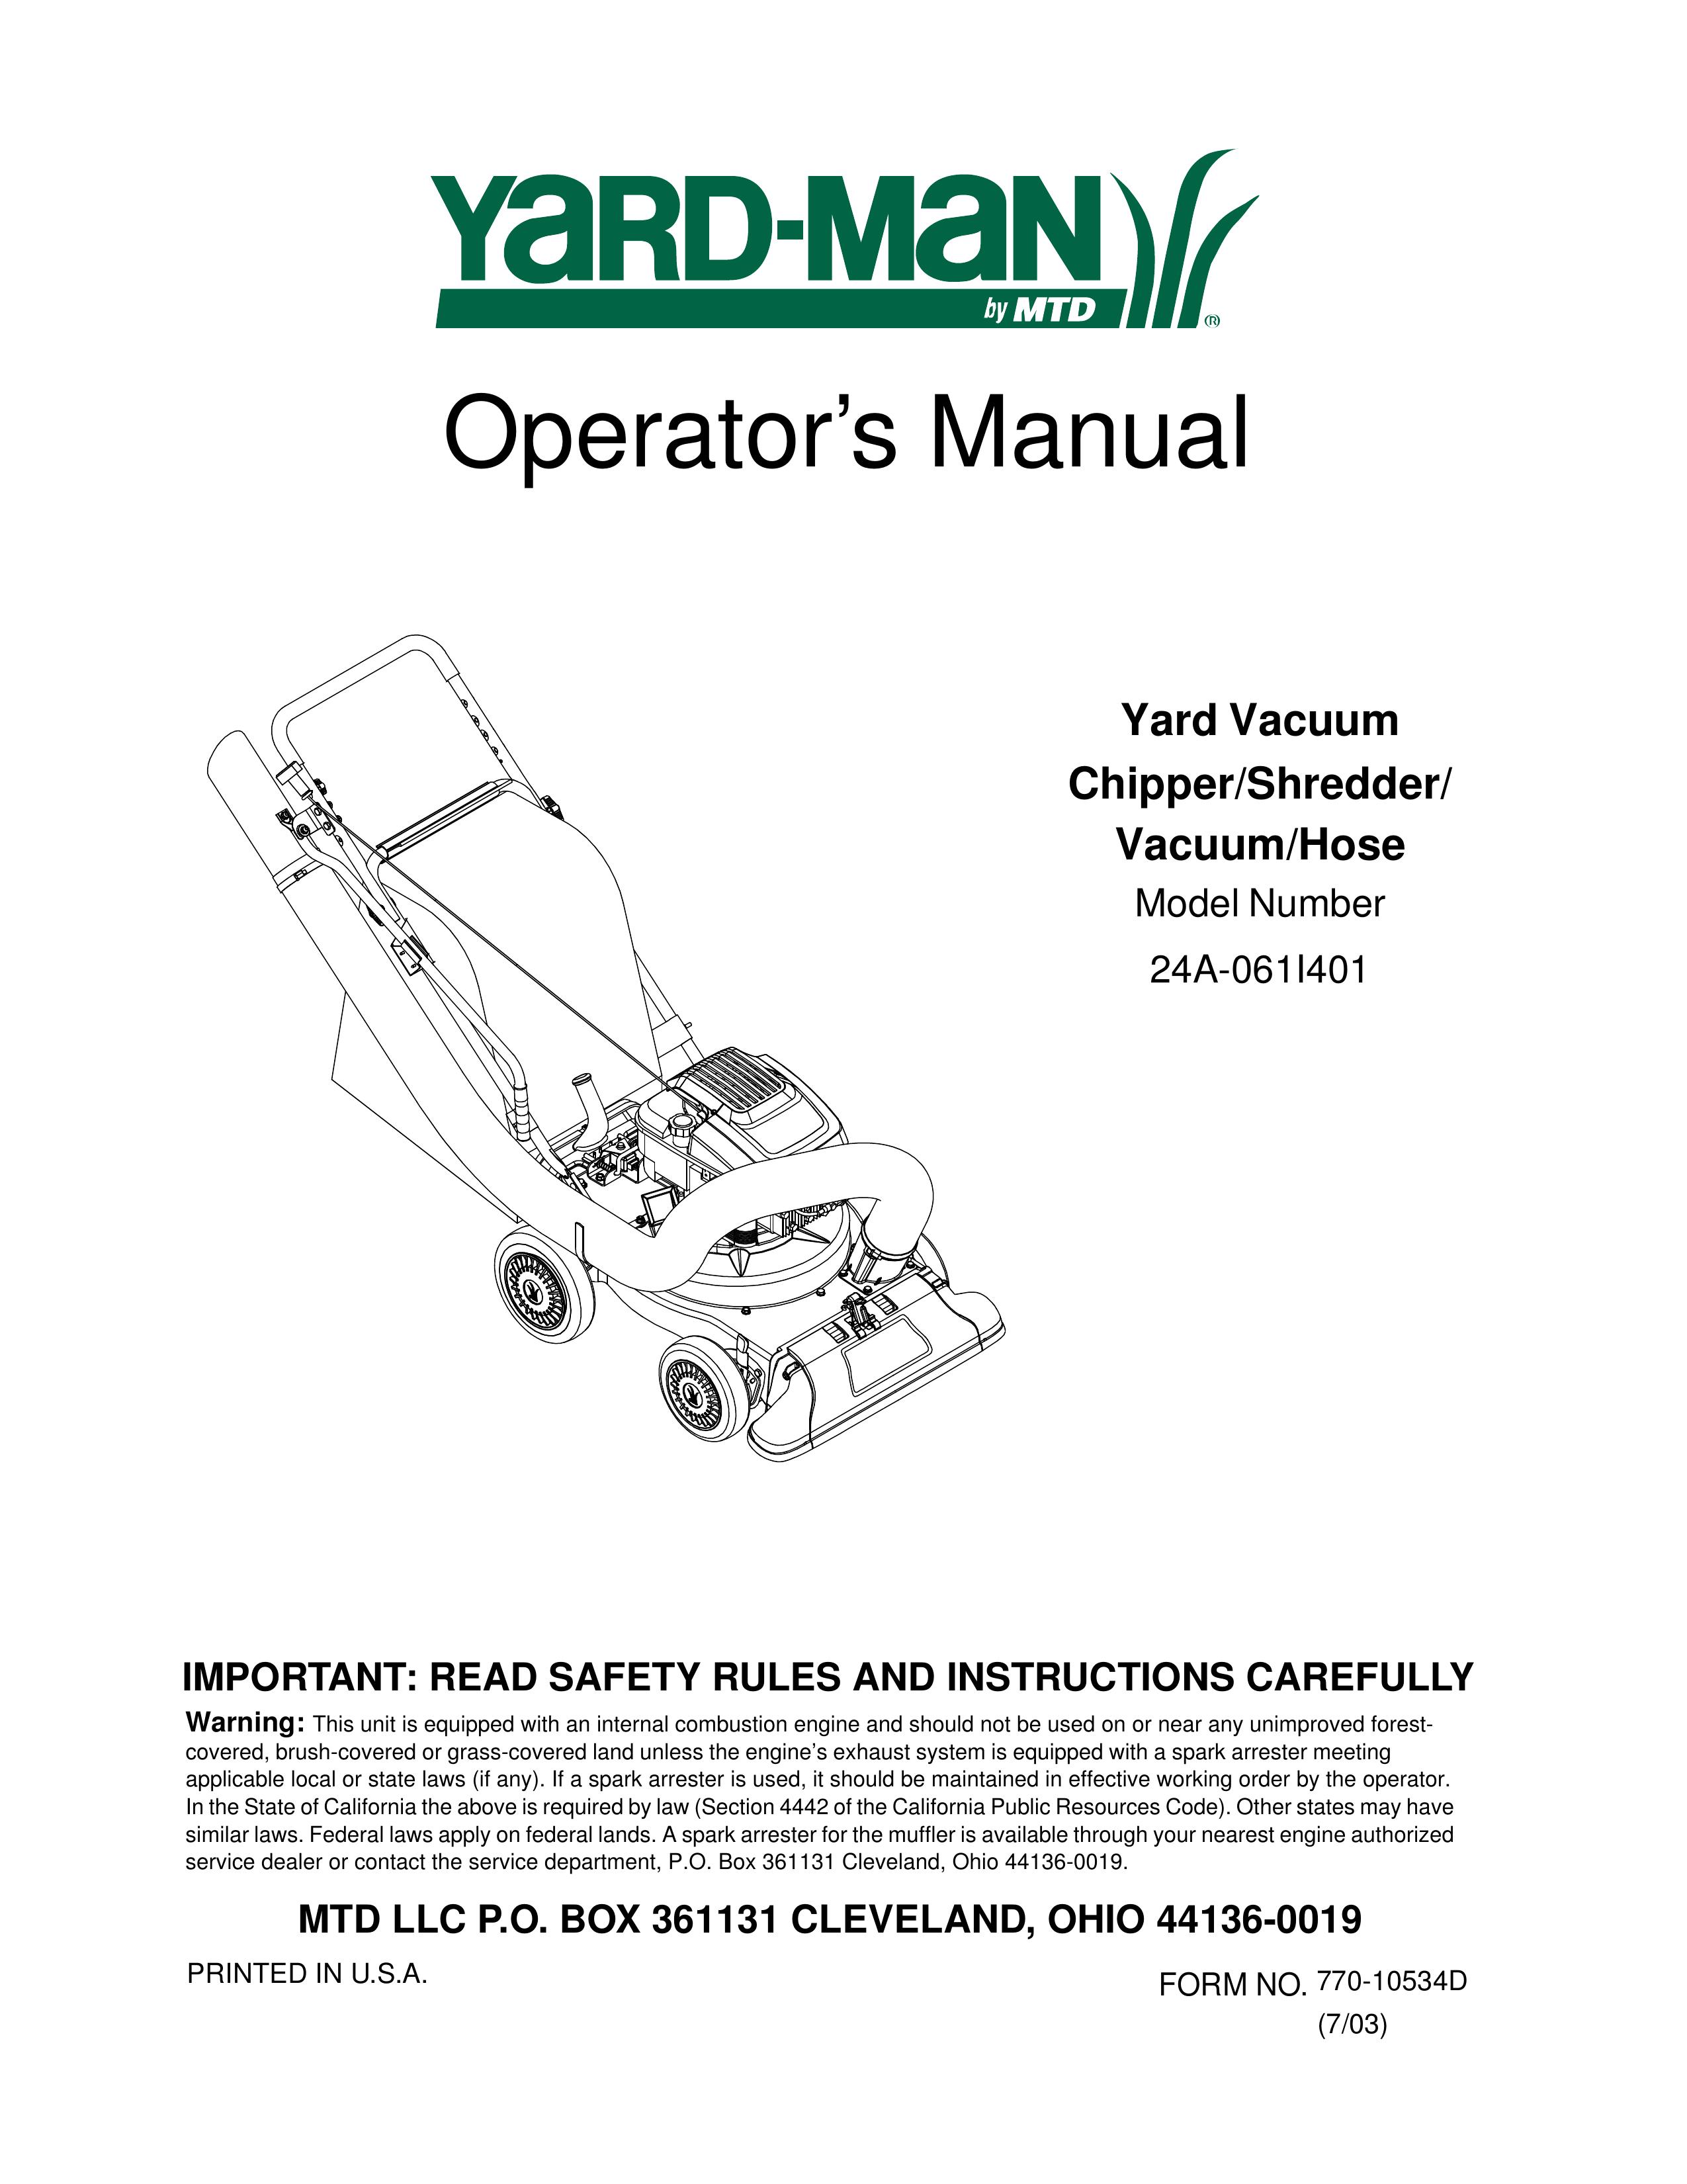 Yard-Man 24A-061I401 Chipper User Manual